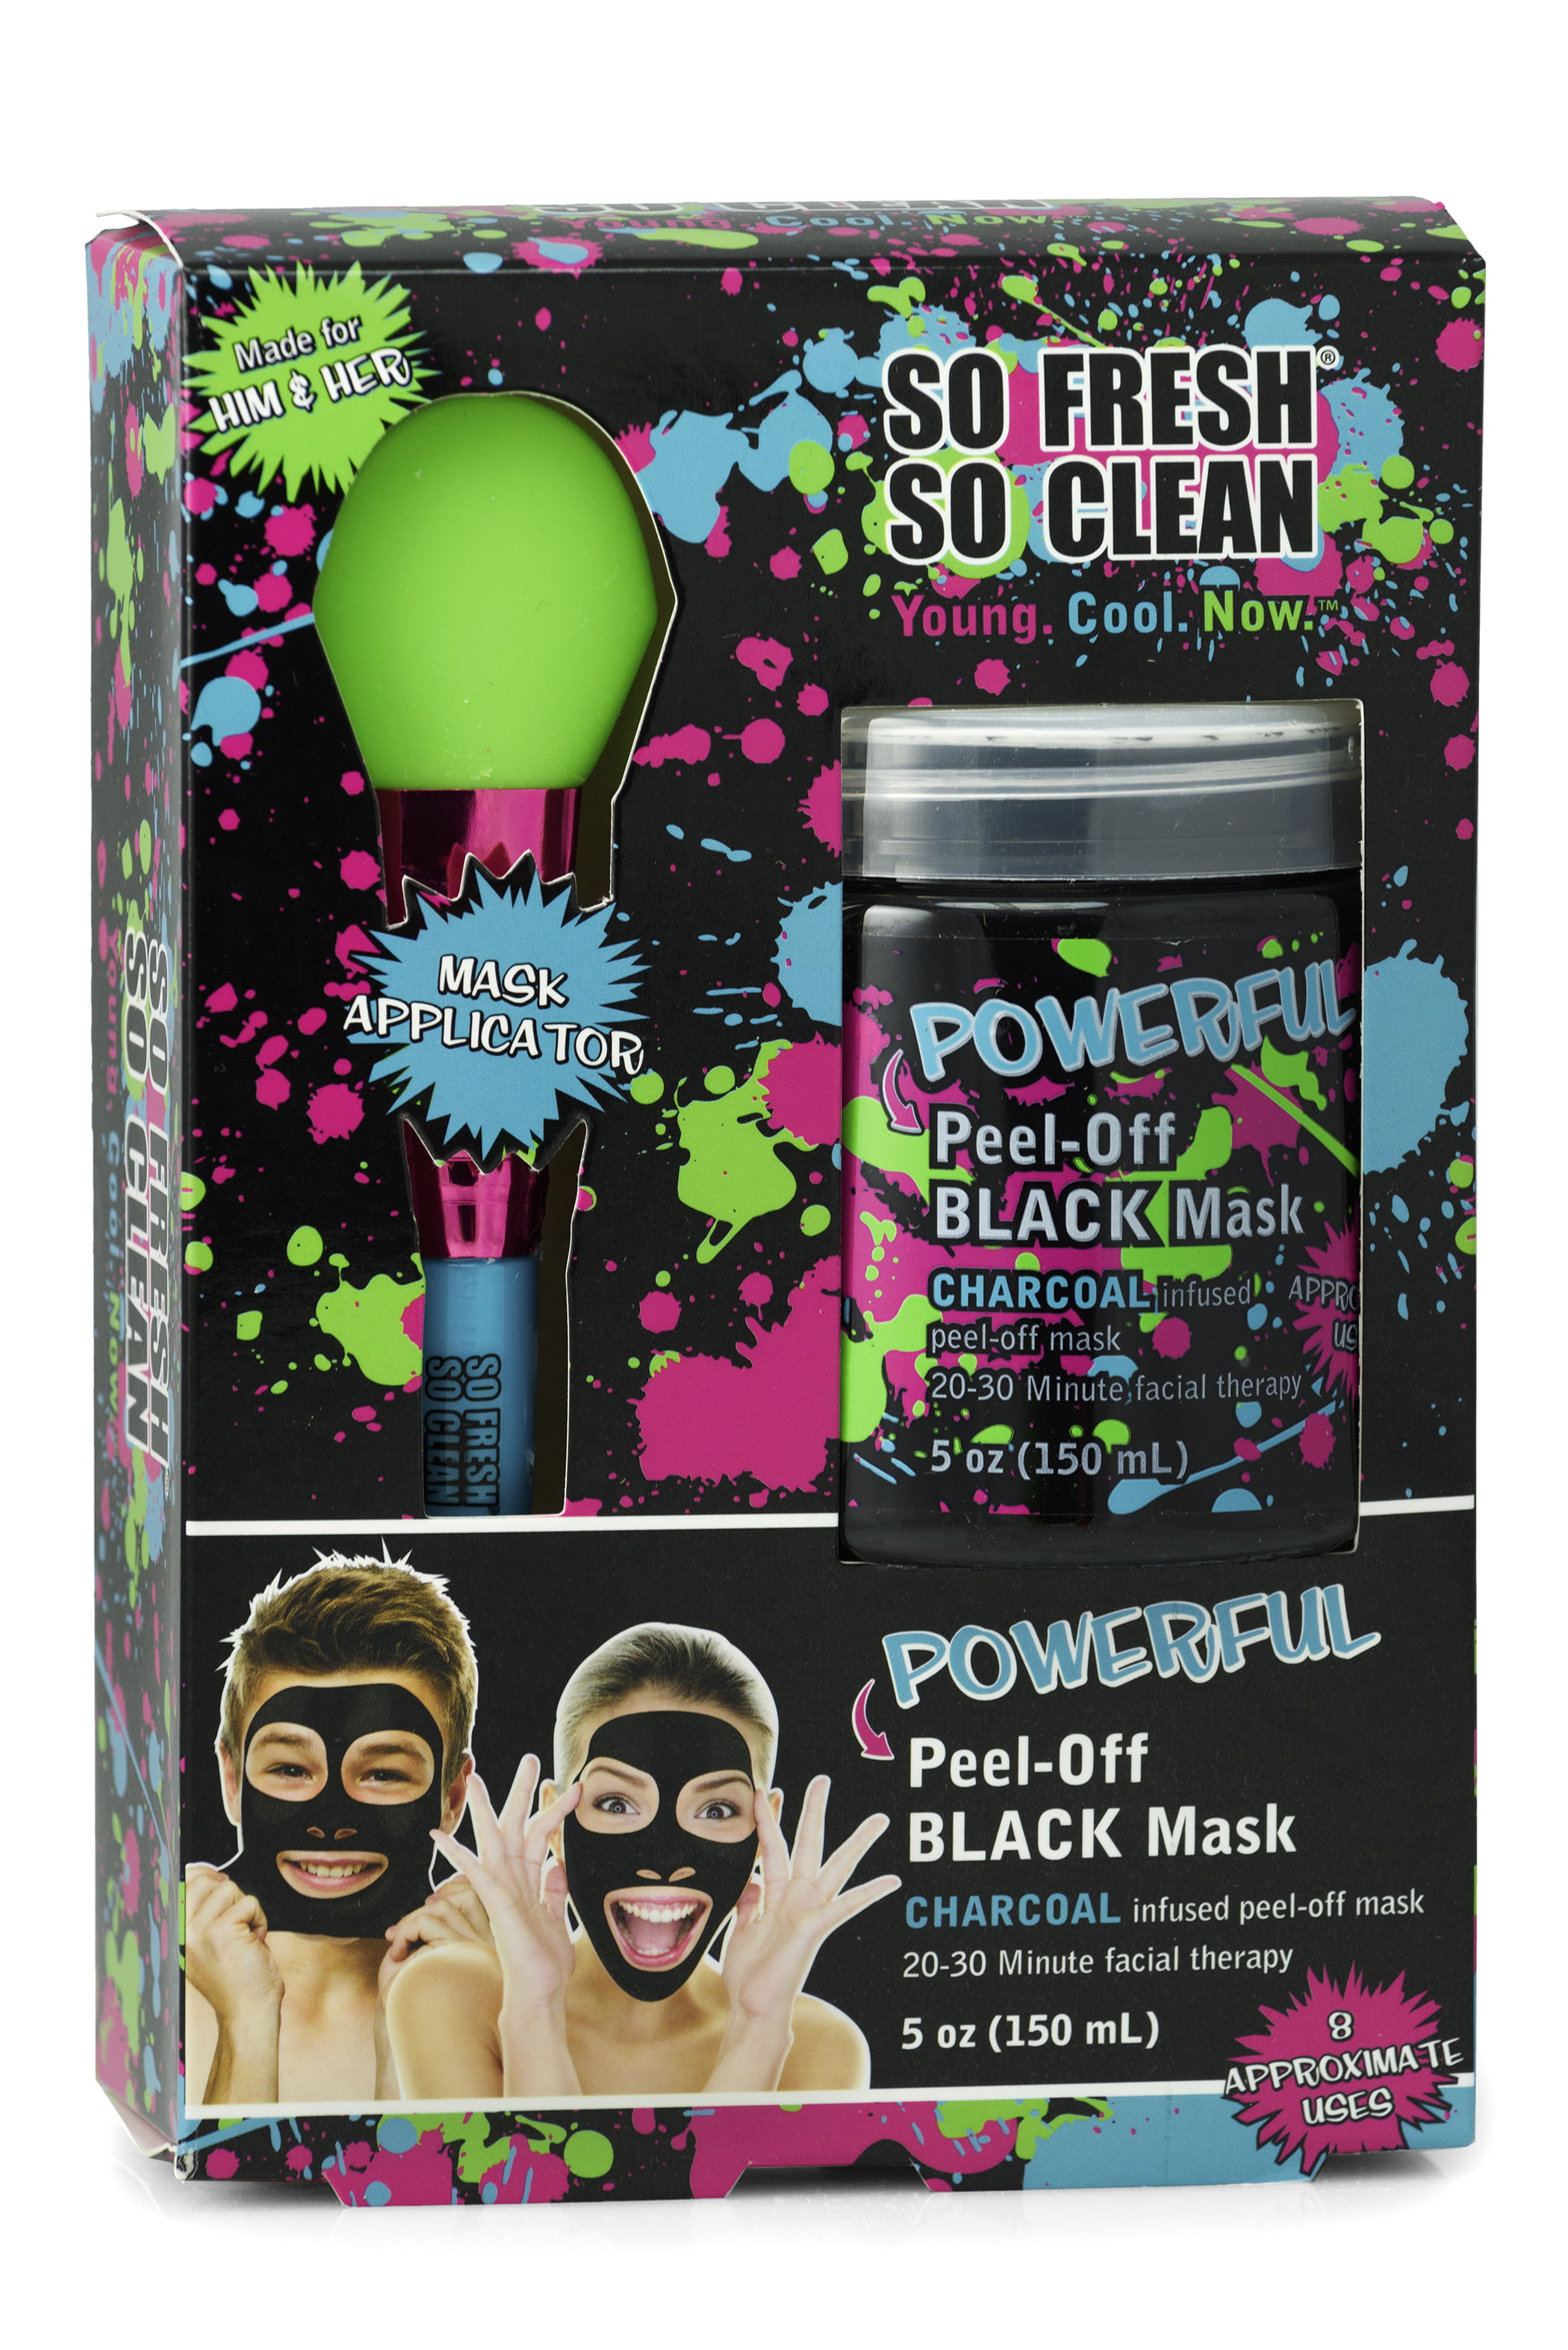 Powerful black peel off mask